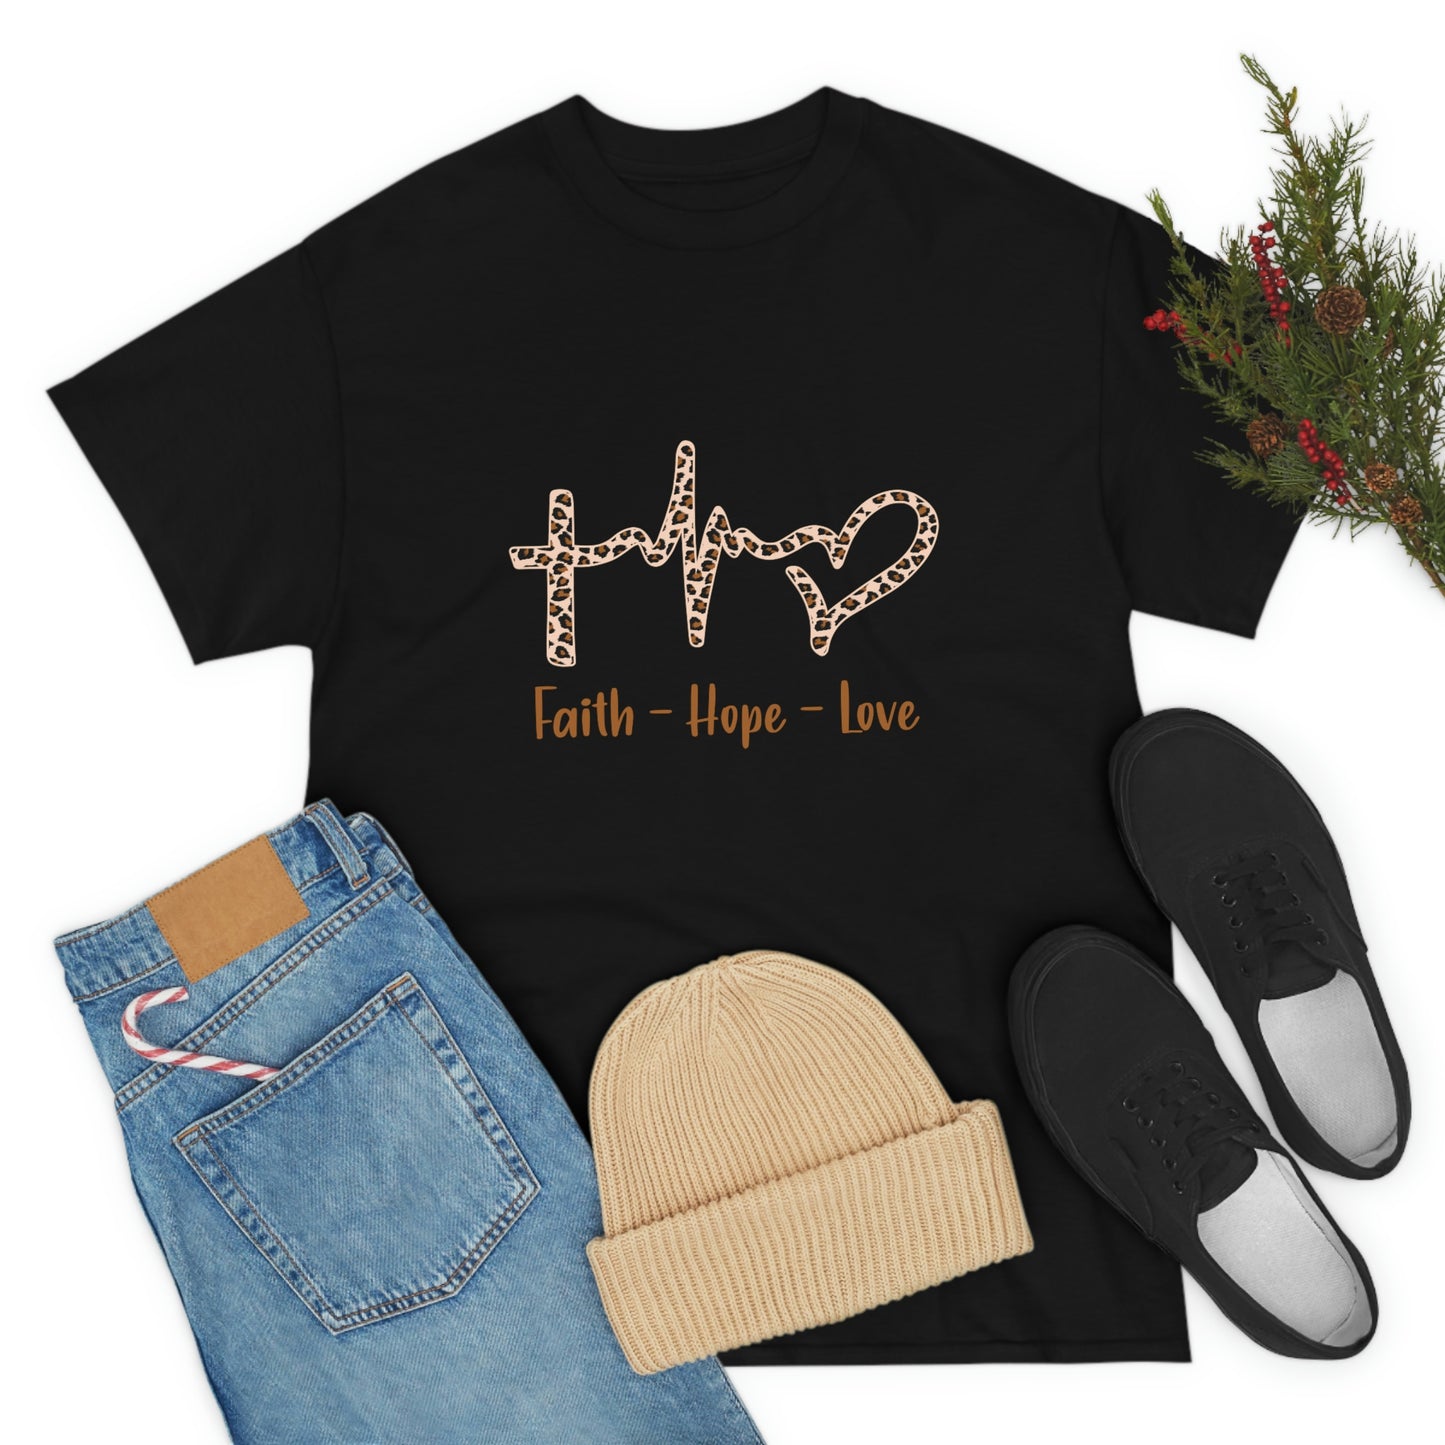 Faith, Hope, Love T-shirt